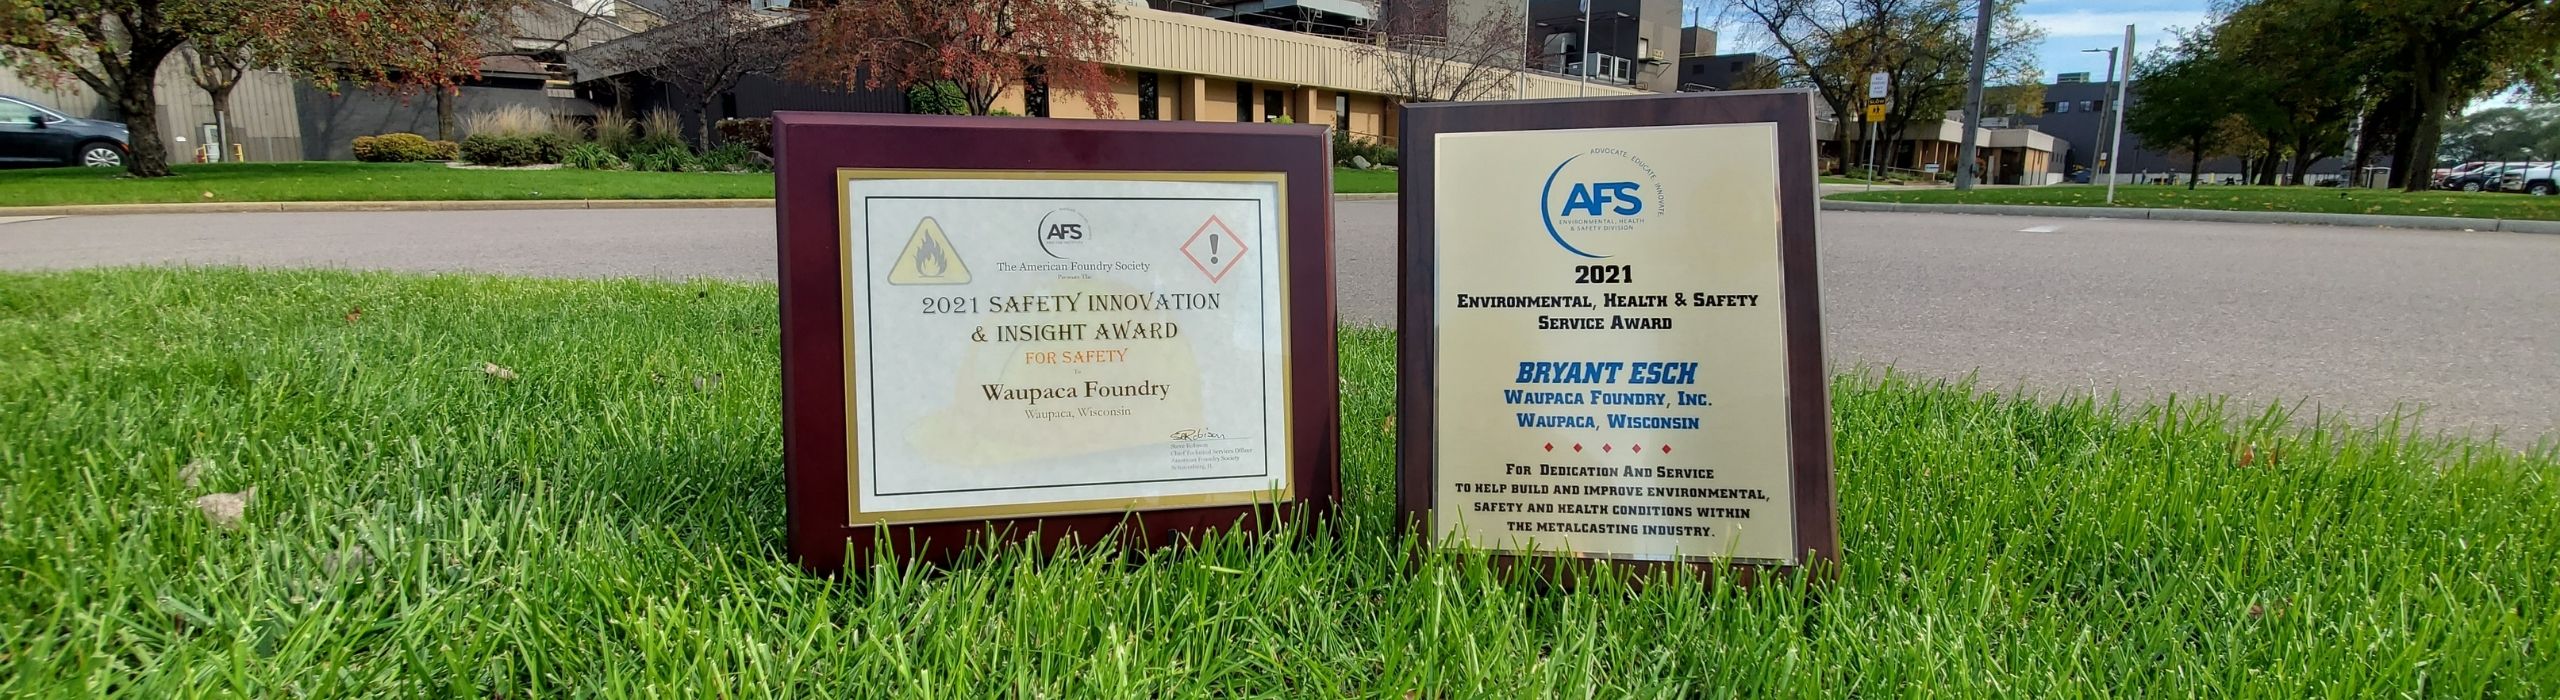 2021 Environmental, Health & Safety Service Award AND Safety Innovation and Insight Award